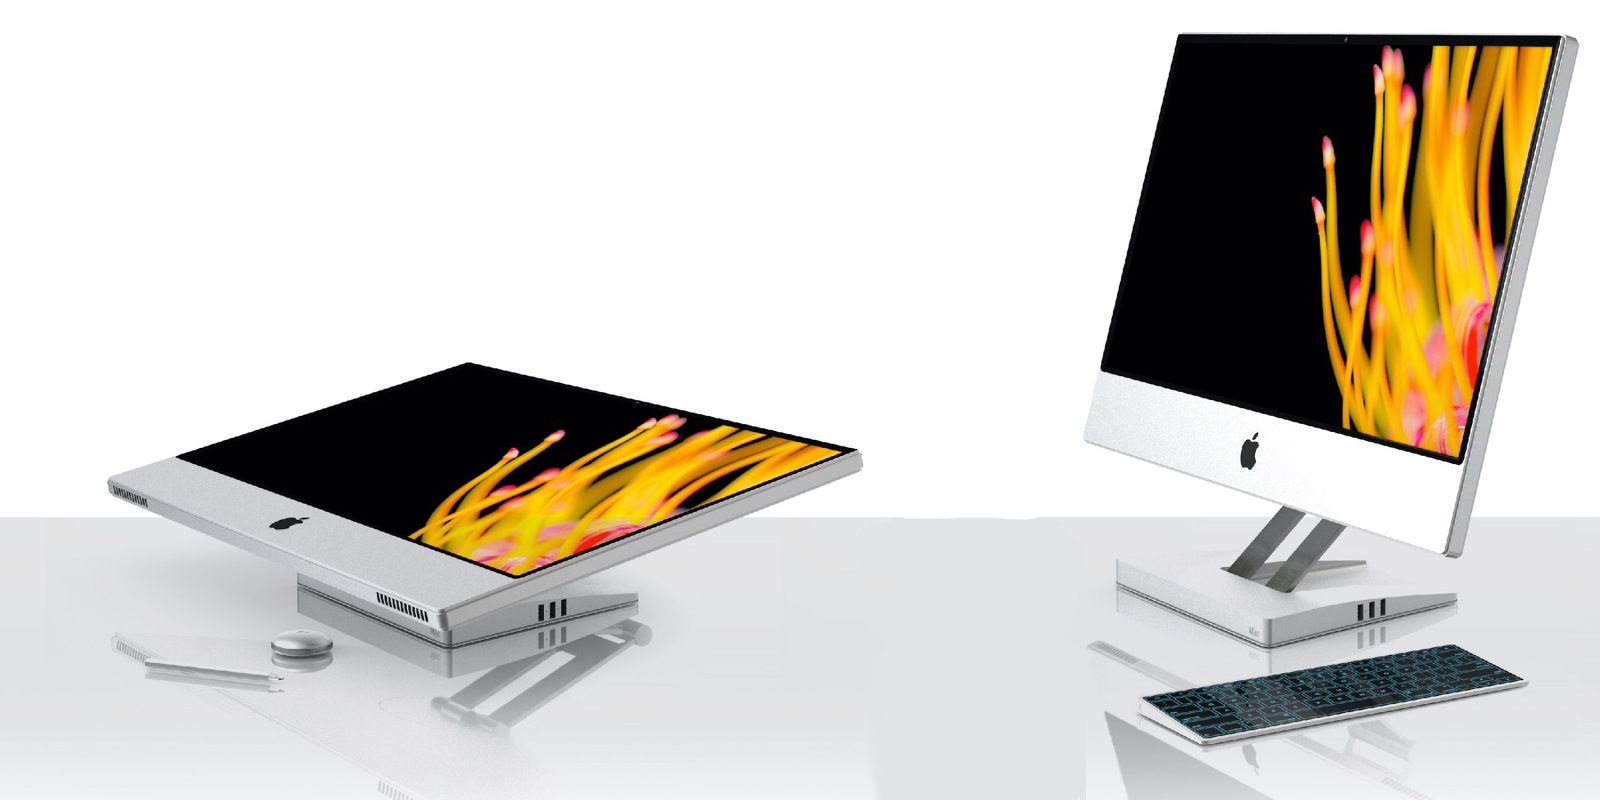 Touchscreen Mac concept by Antonio DeRosa